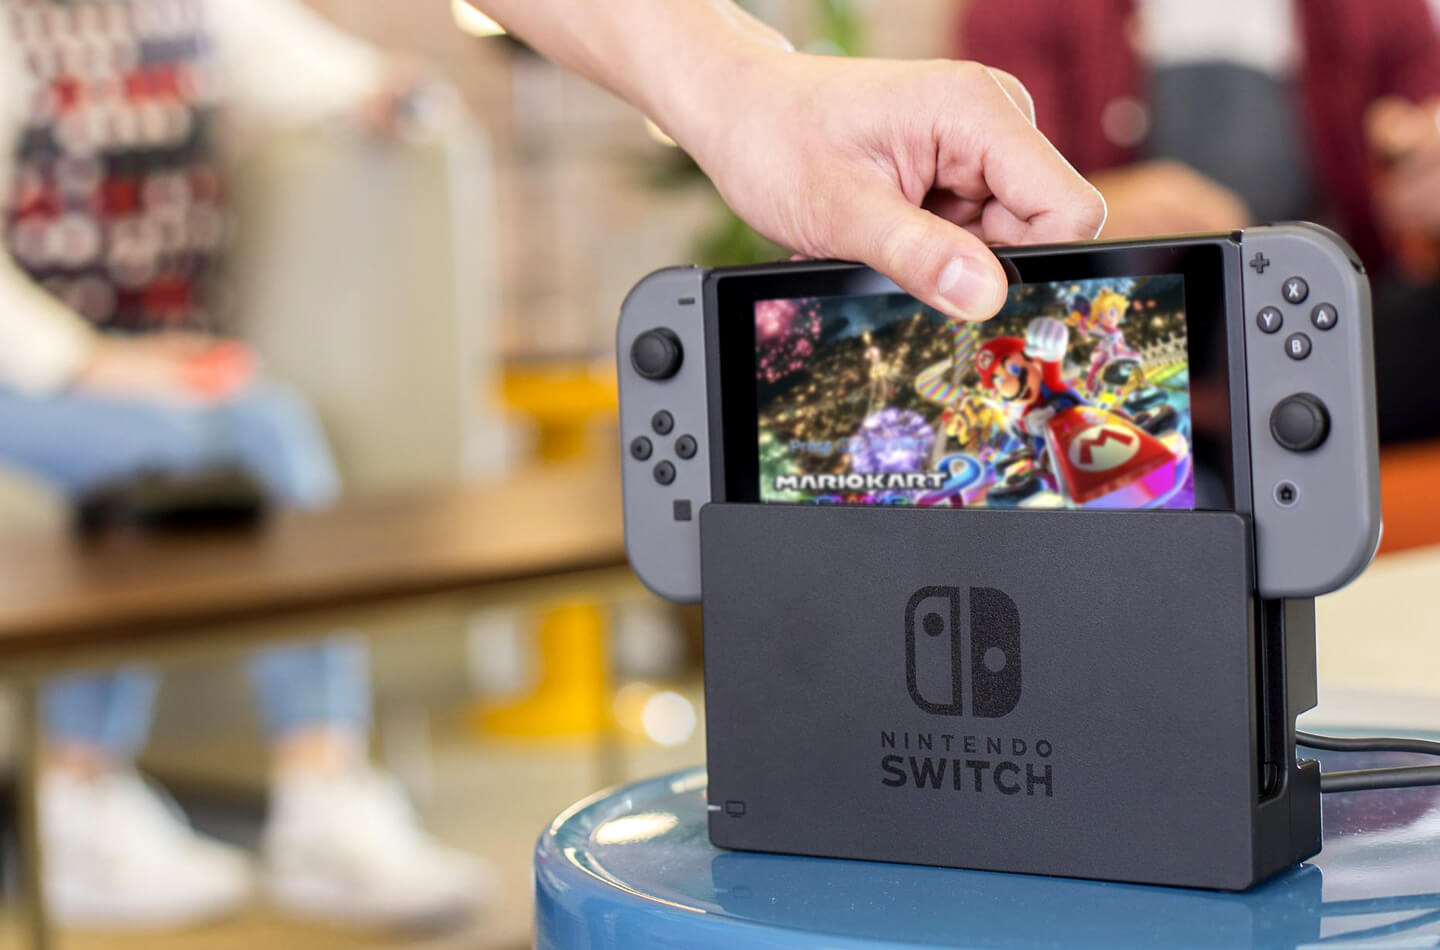 Wreedheid Catastrofe zoete smaak Nintendo Switch kopen in de aanbieding | LetsGoDigital